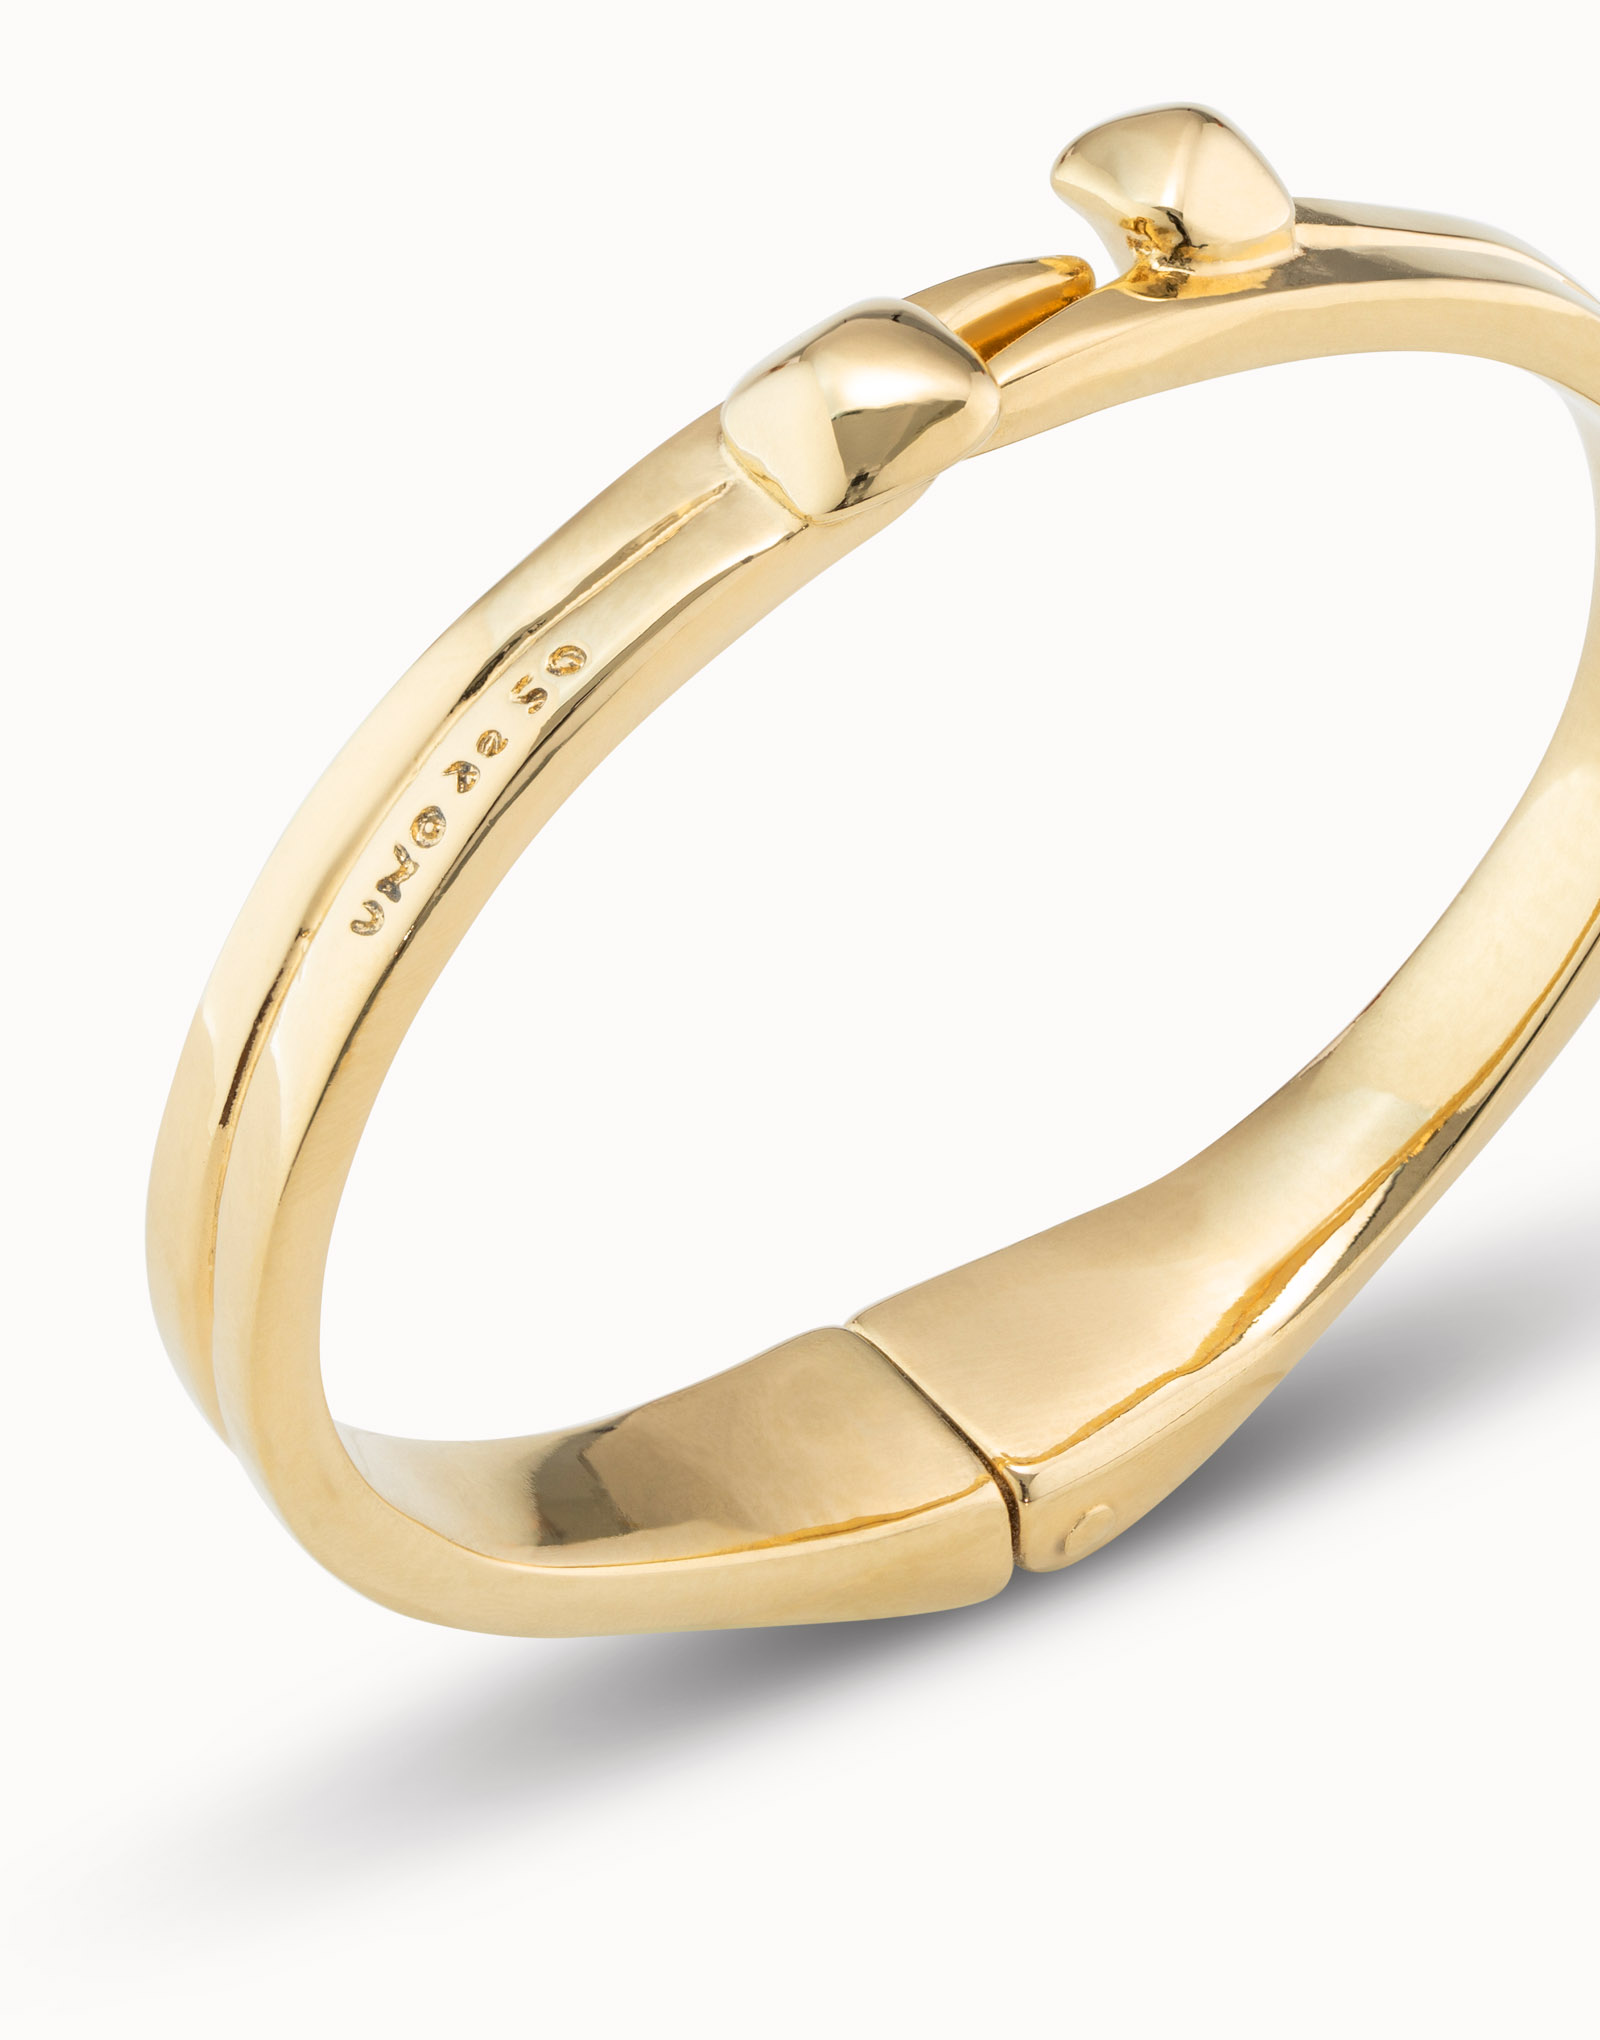 18K gold-plated nail shaped bracelet with hidden spring, Golden, large image number null